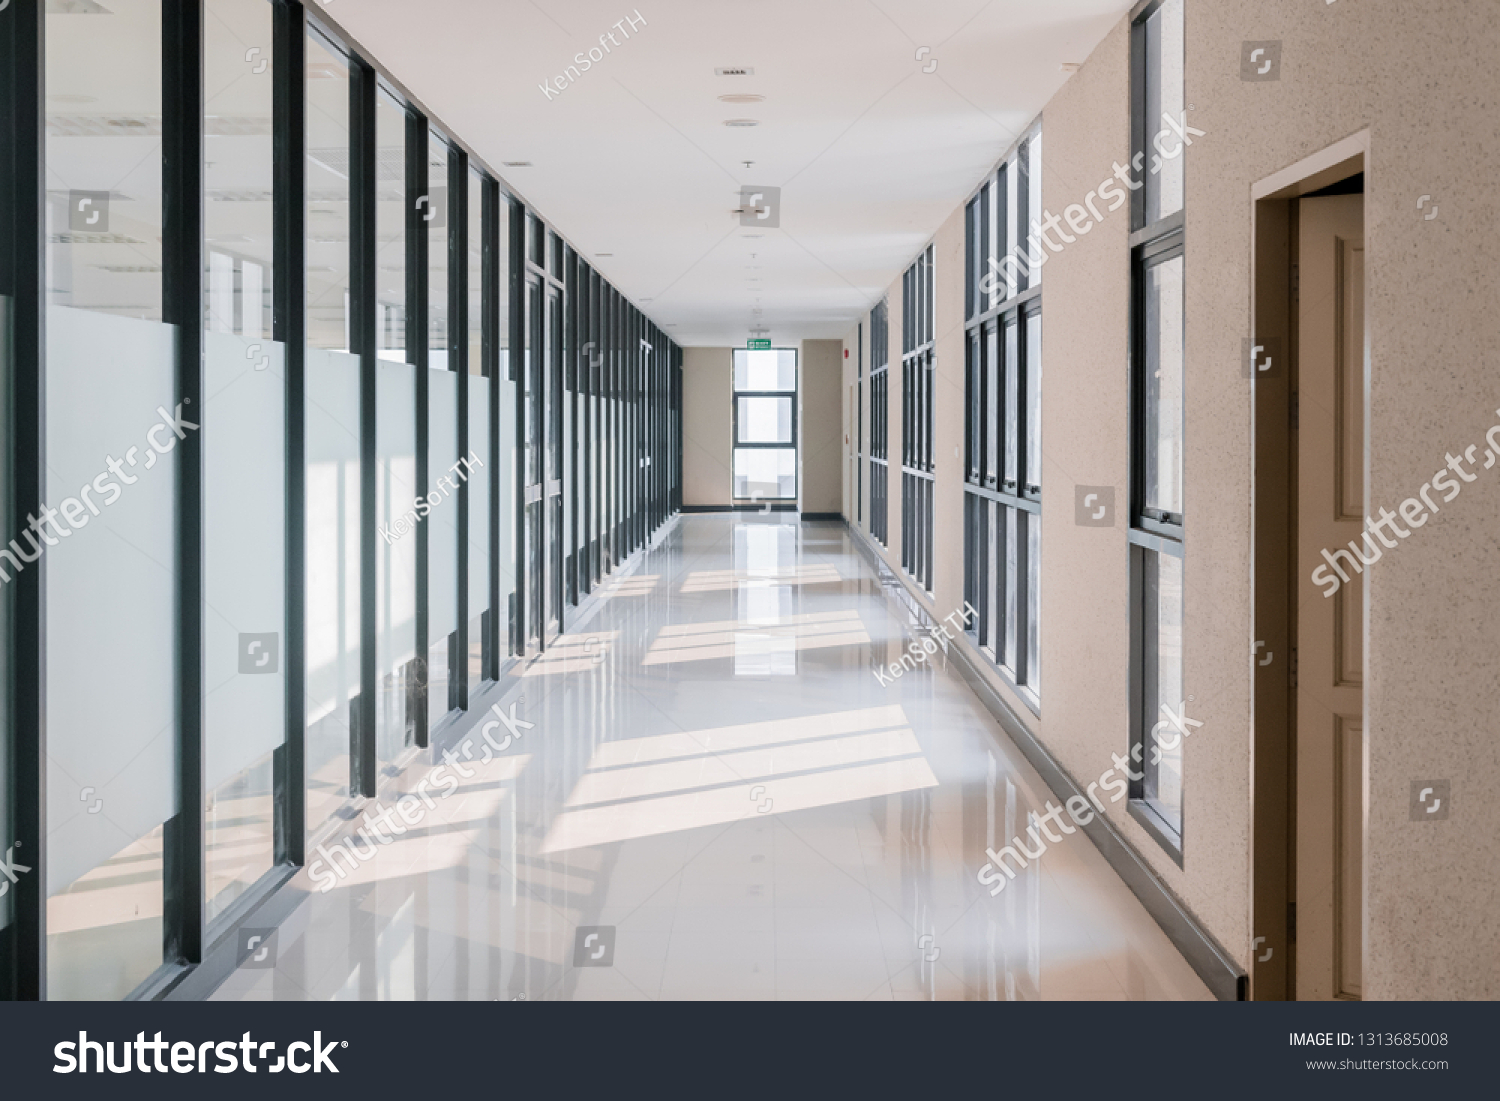 Office College Hallway Glass Windows On Stock Photo 1313685008 |  Shutterstock